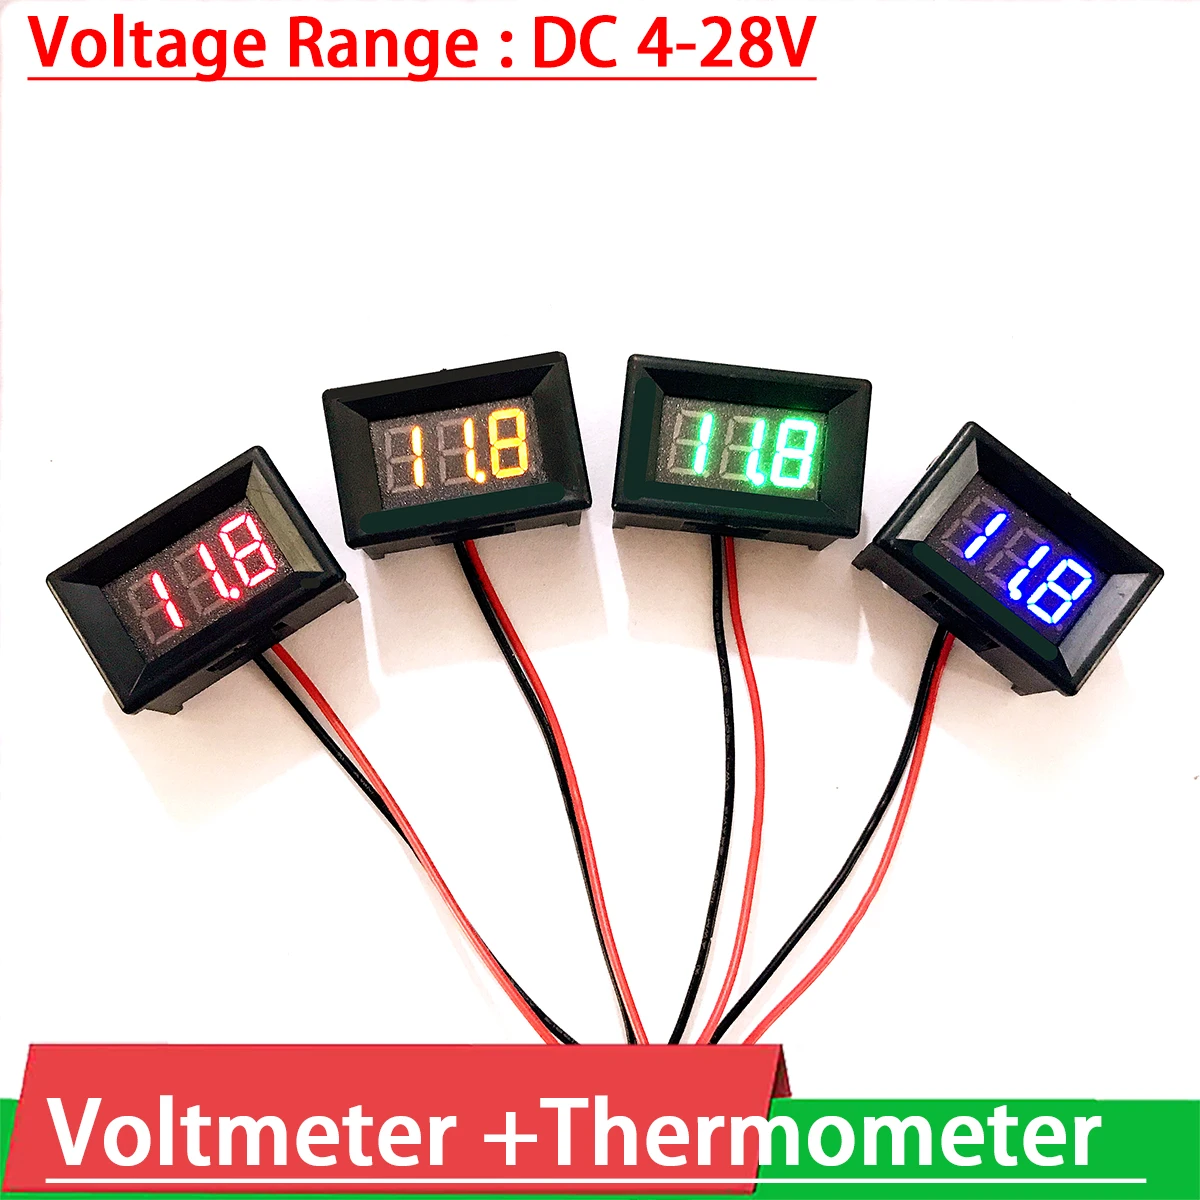 

DYKB 2IN1 Voltmeter + Thermometer LED Digital display temperature meter volt TEMP sensor for DC 12V 24v car Water Air fish tank